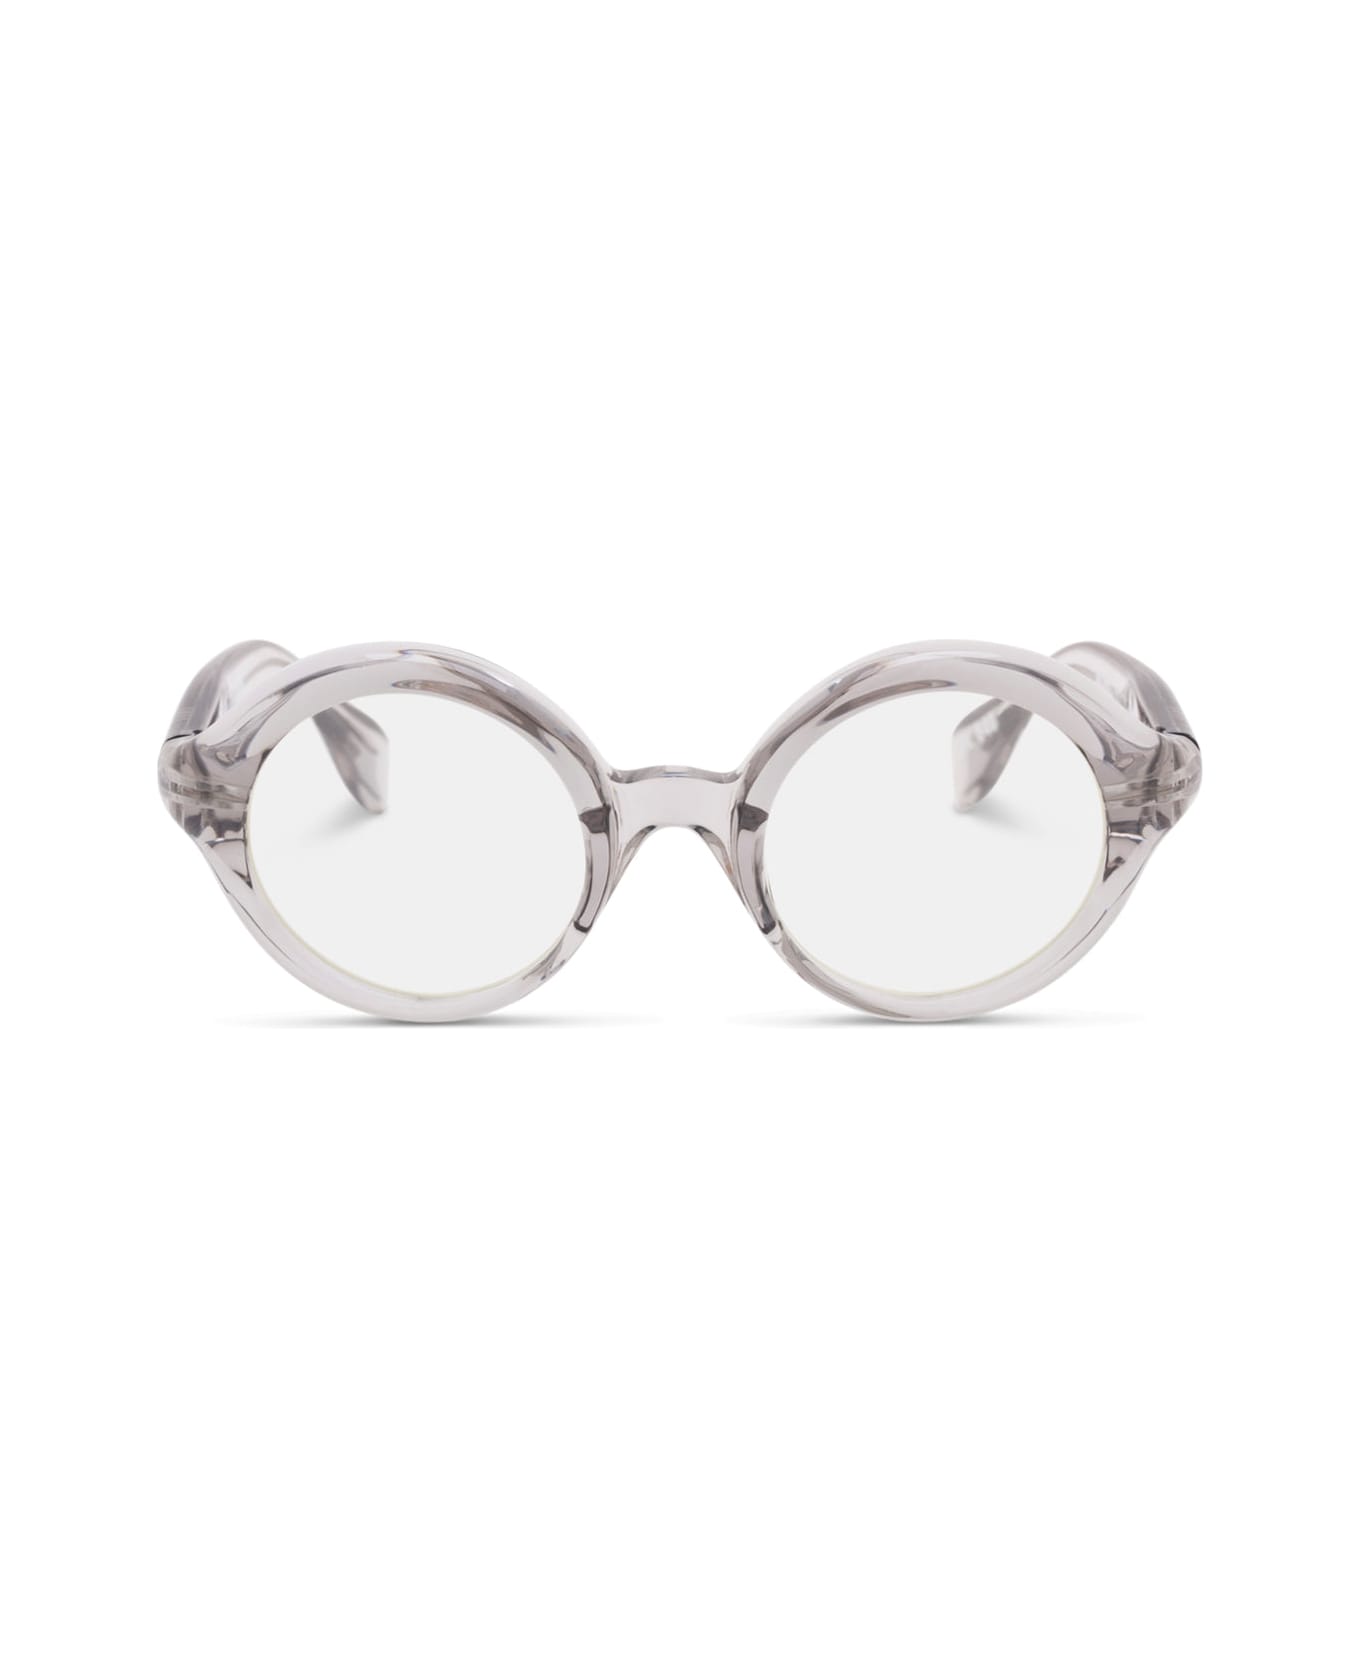 FACTORY900 Rf 013-840 Glasses - grey crystal